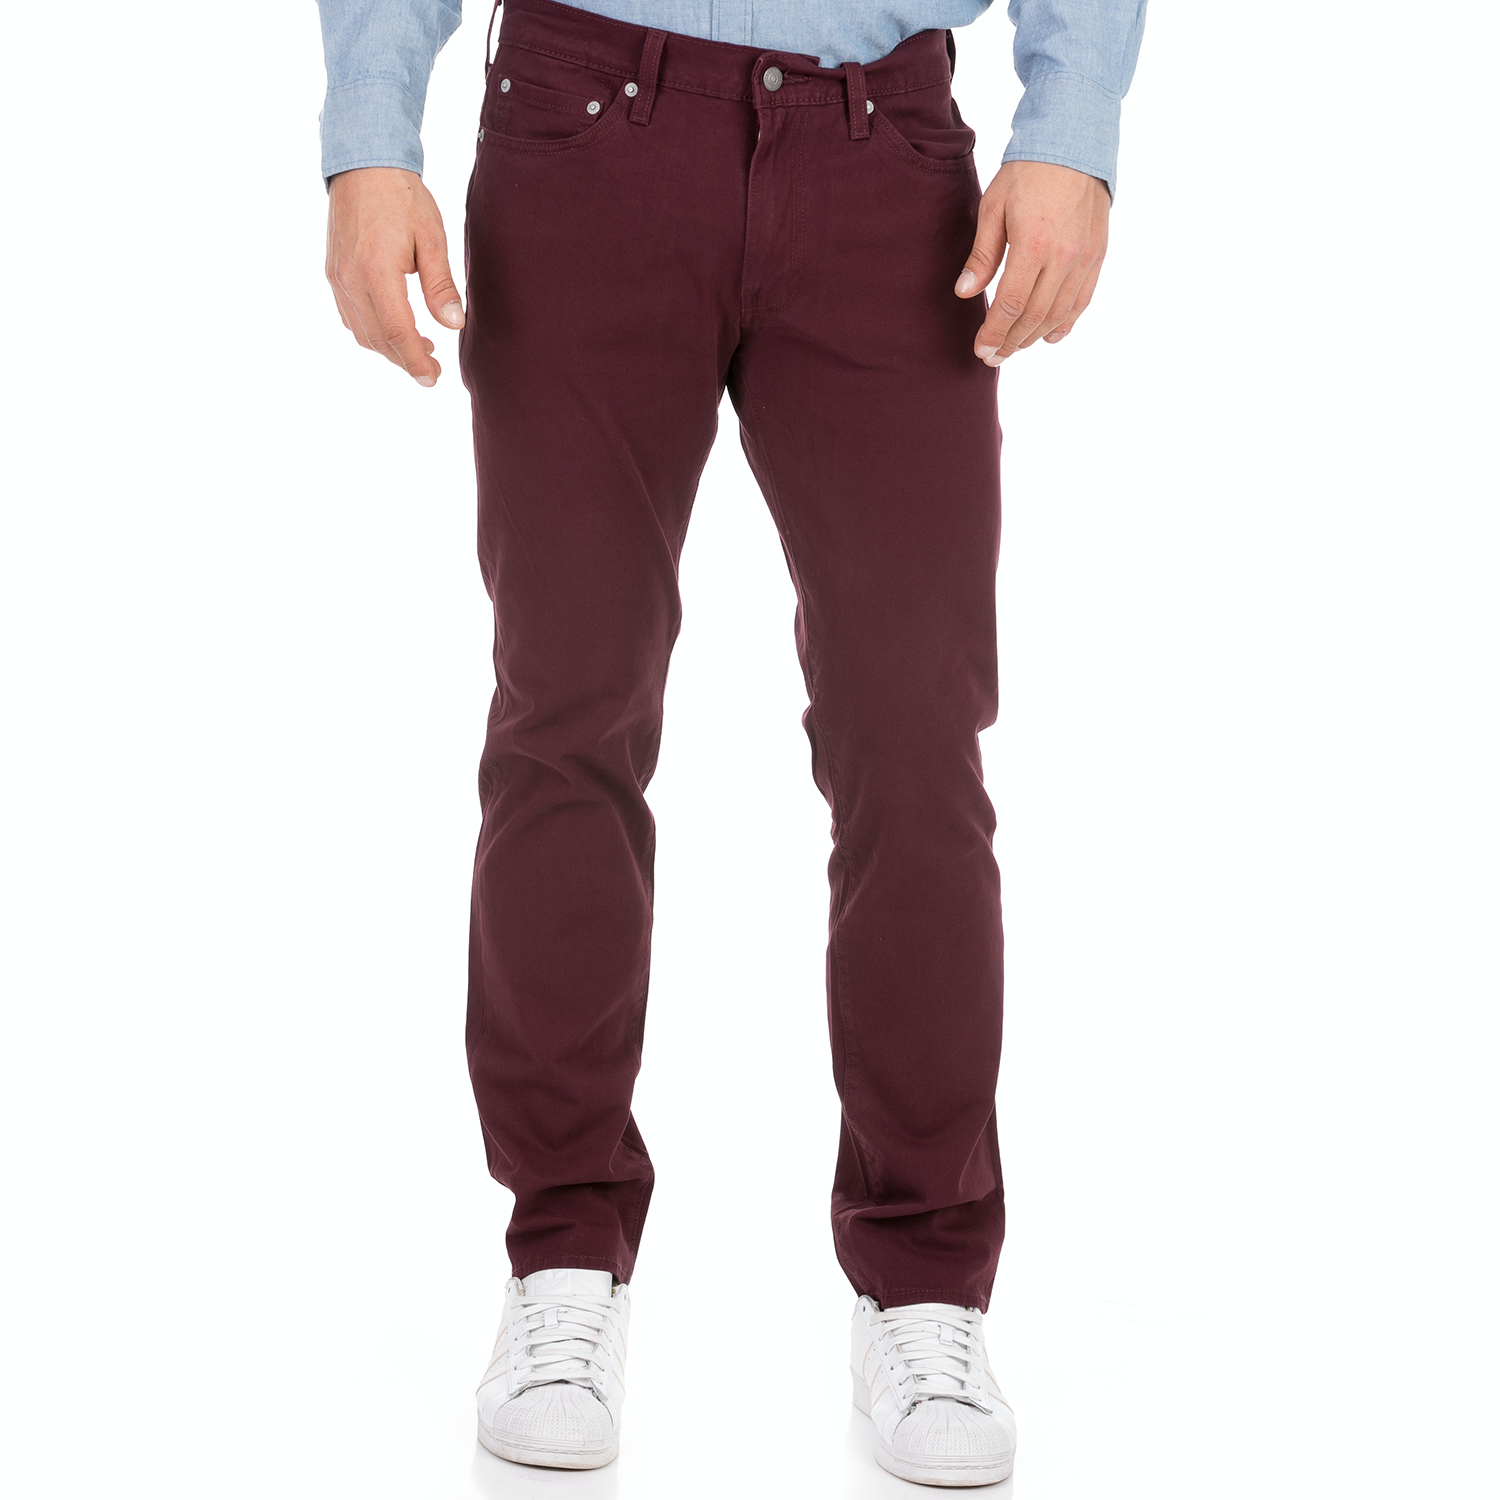 LEVI'S - Ανδρικό jean παντελόνι LEVI'S 511 SLIM WINETASTING BI μπορντό Ανδρικά/Ρούχα/Τζίν/Skinny